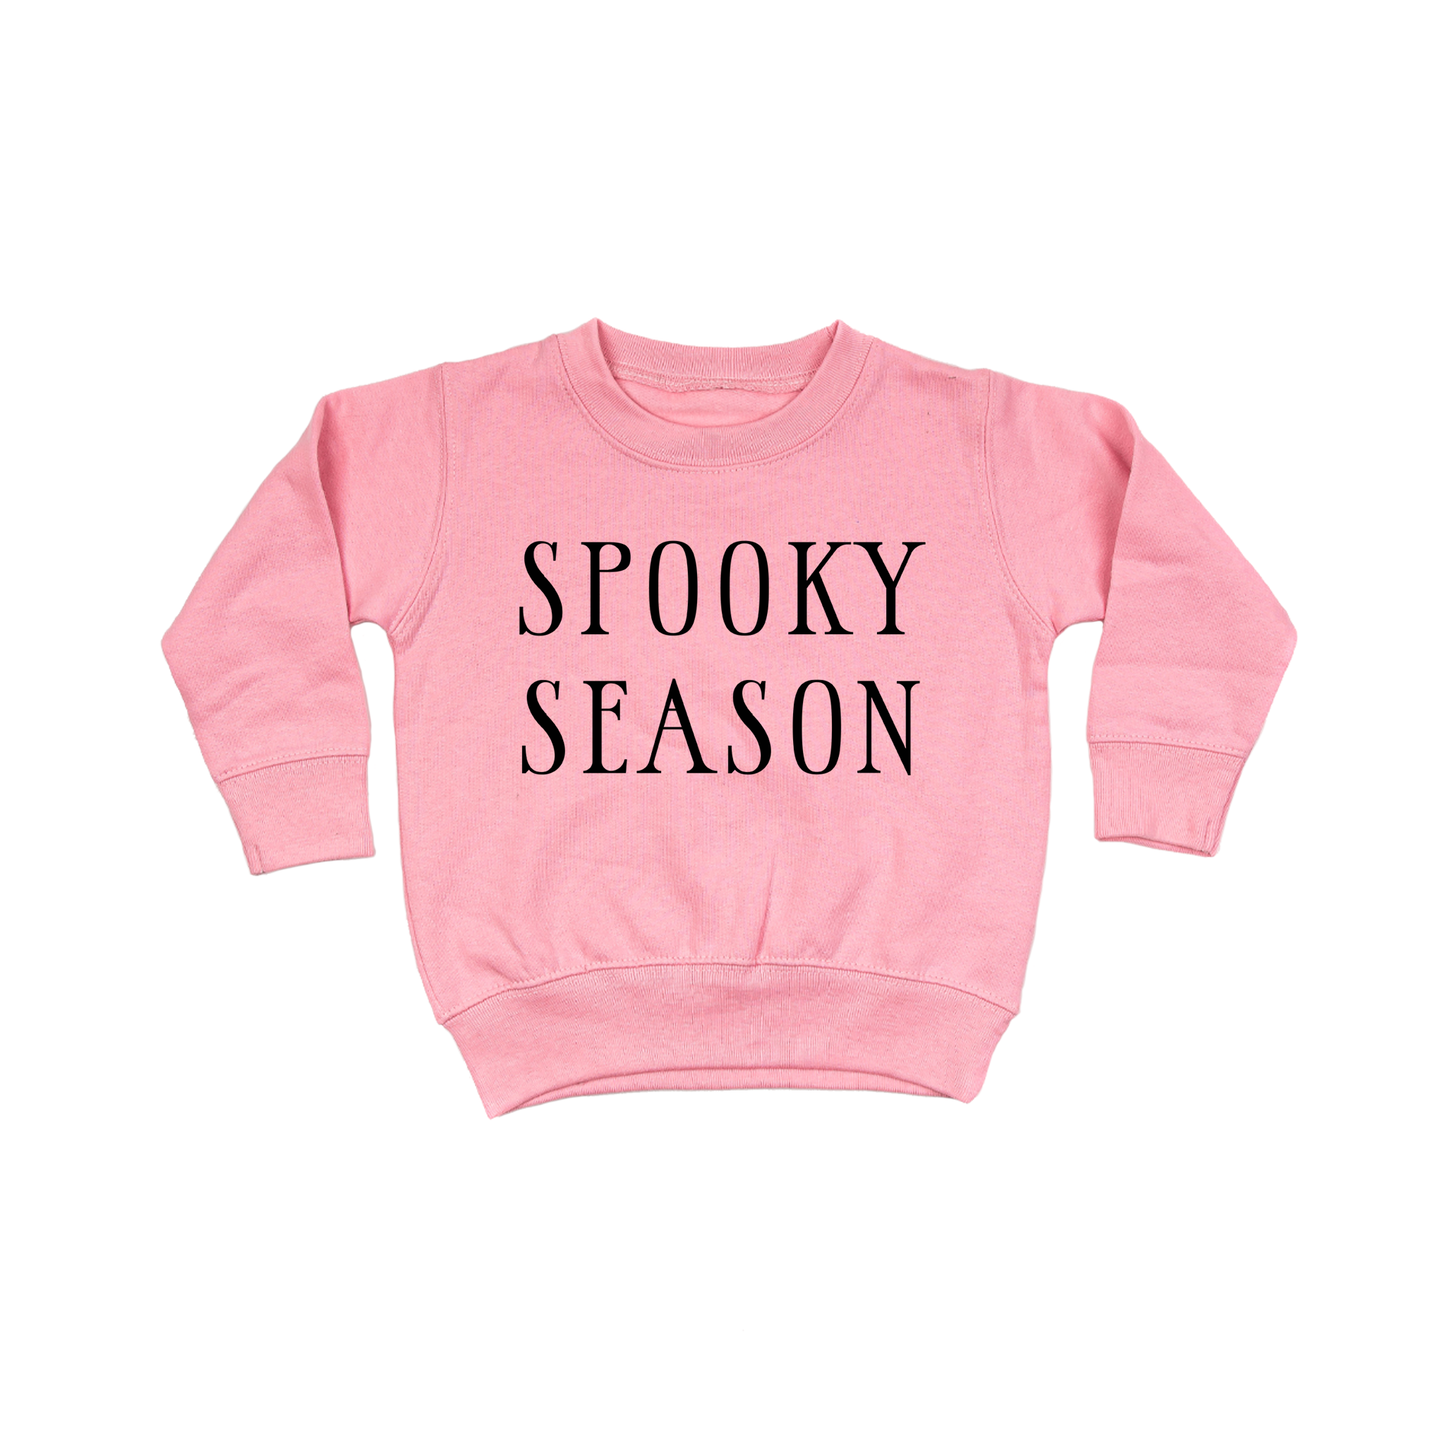 Spooky Season (Black) - Kids Sweatshirt (Pink)